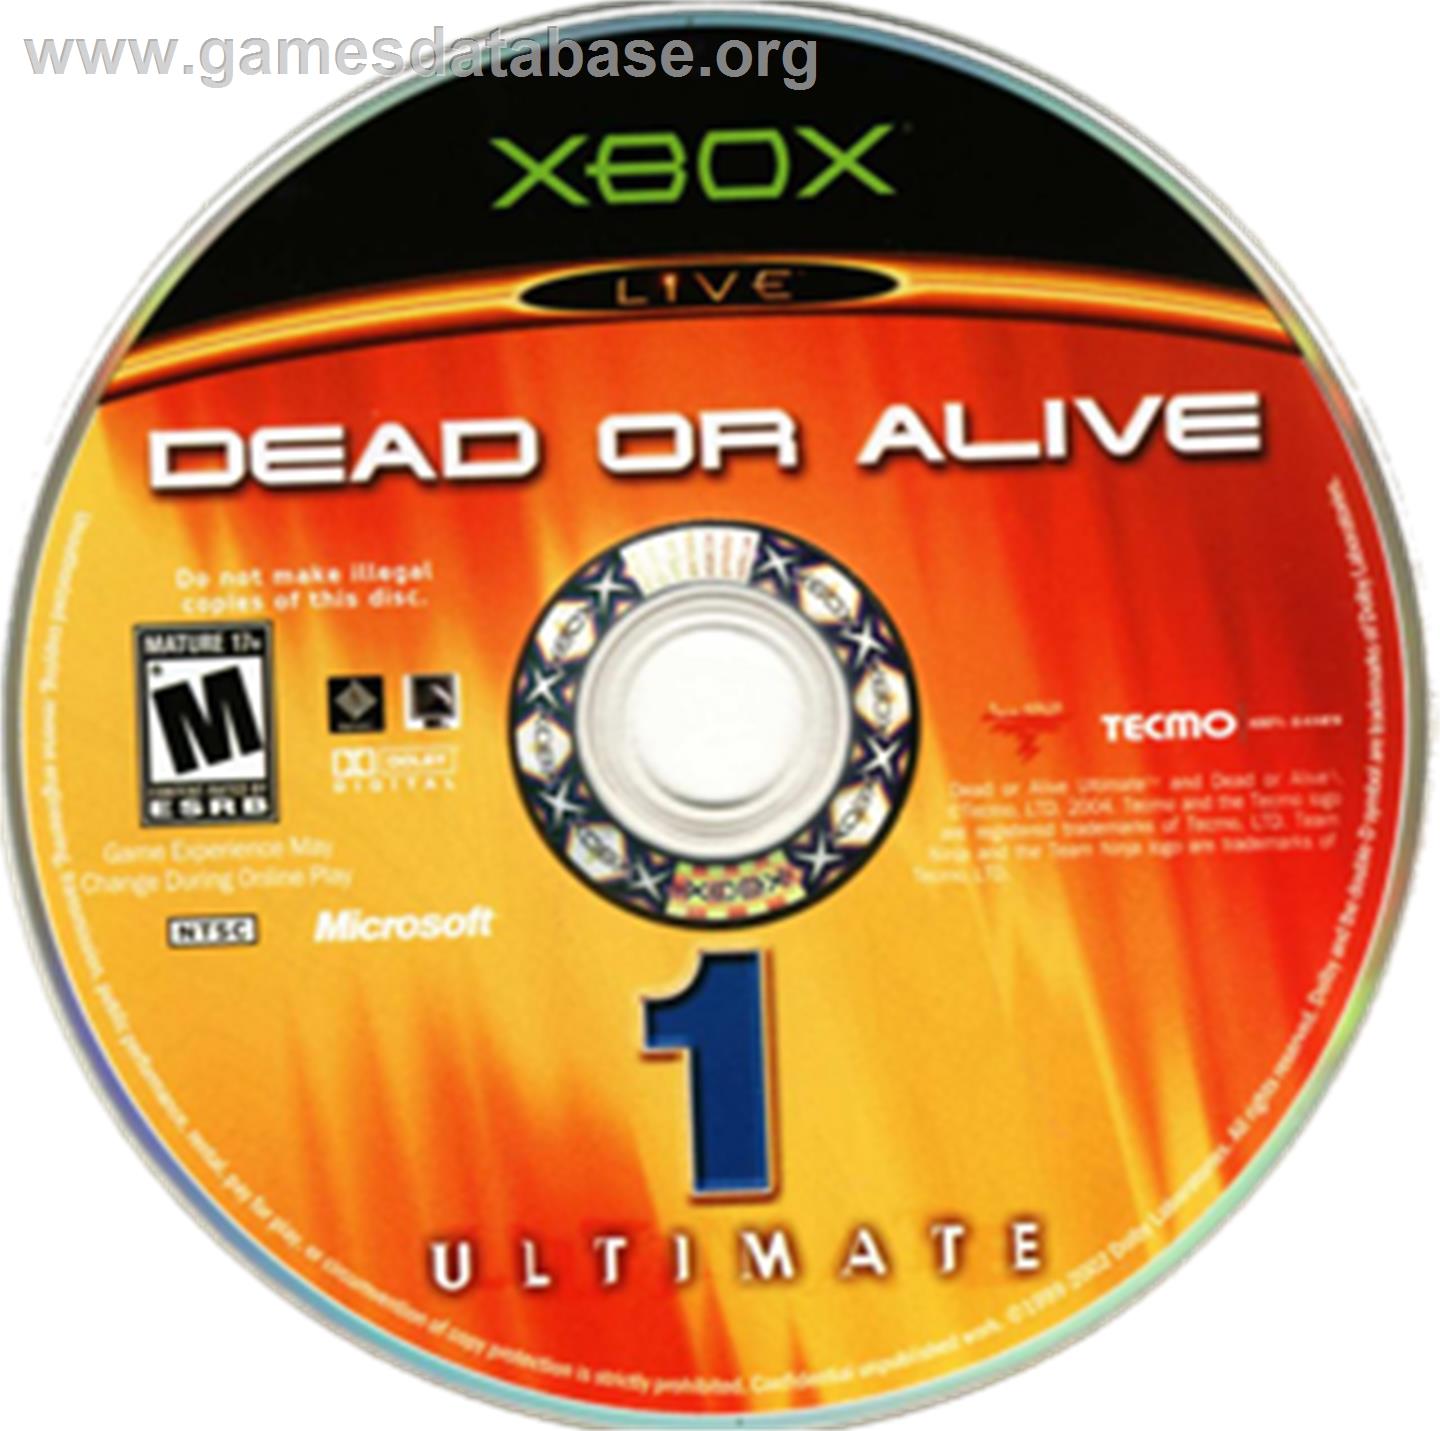 Dead or Alive Ultimate - Microsoft Xbox - Artwork - CD